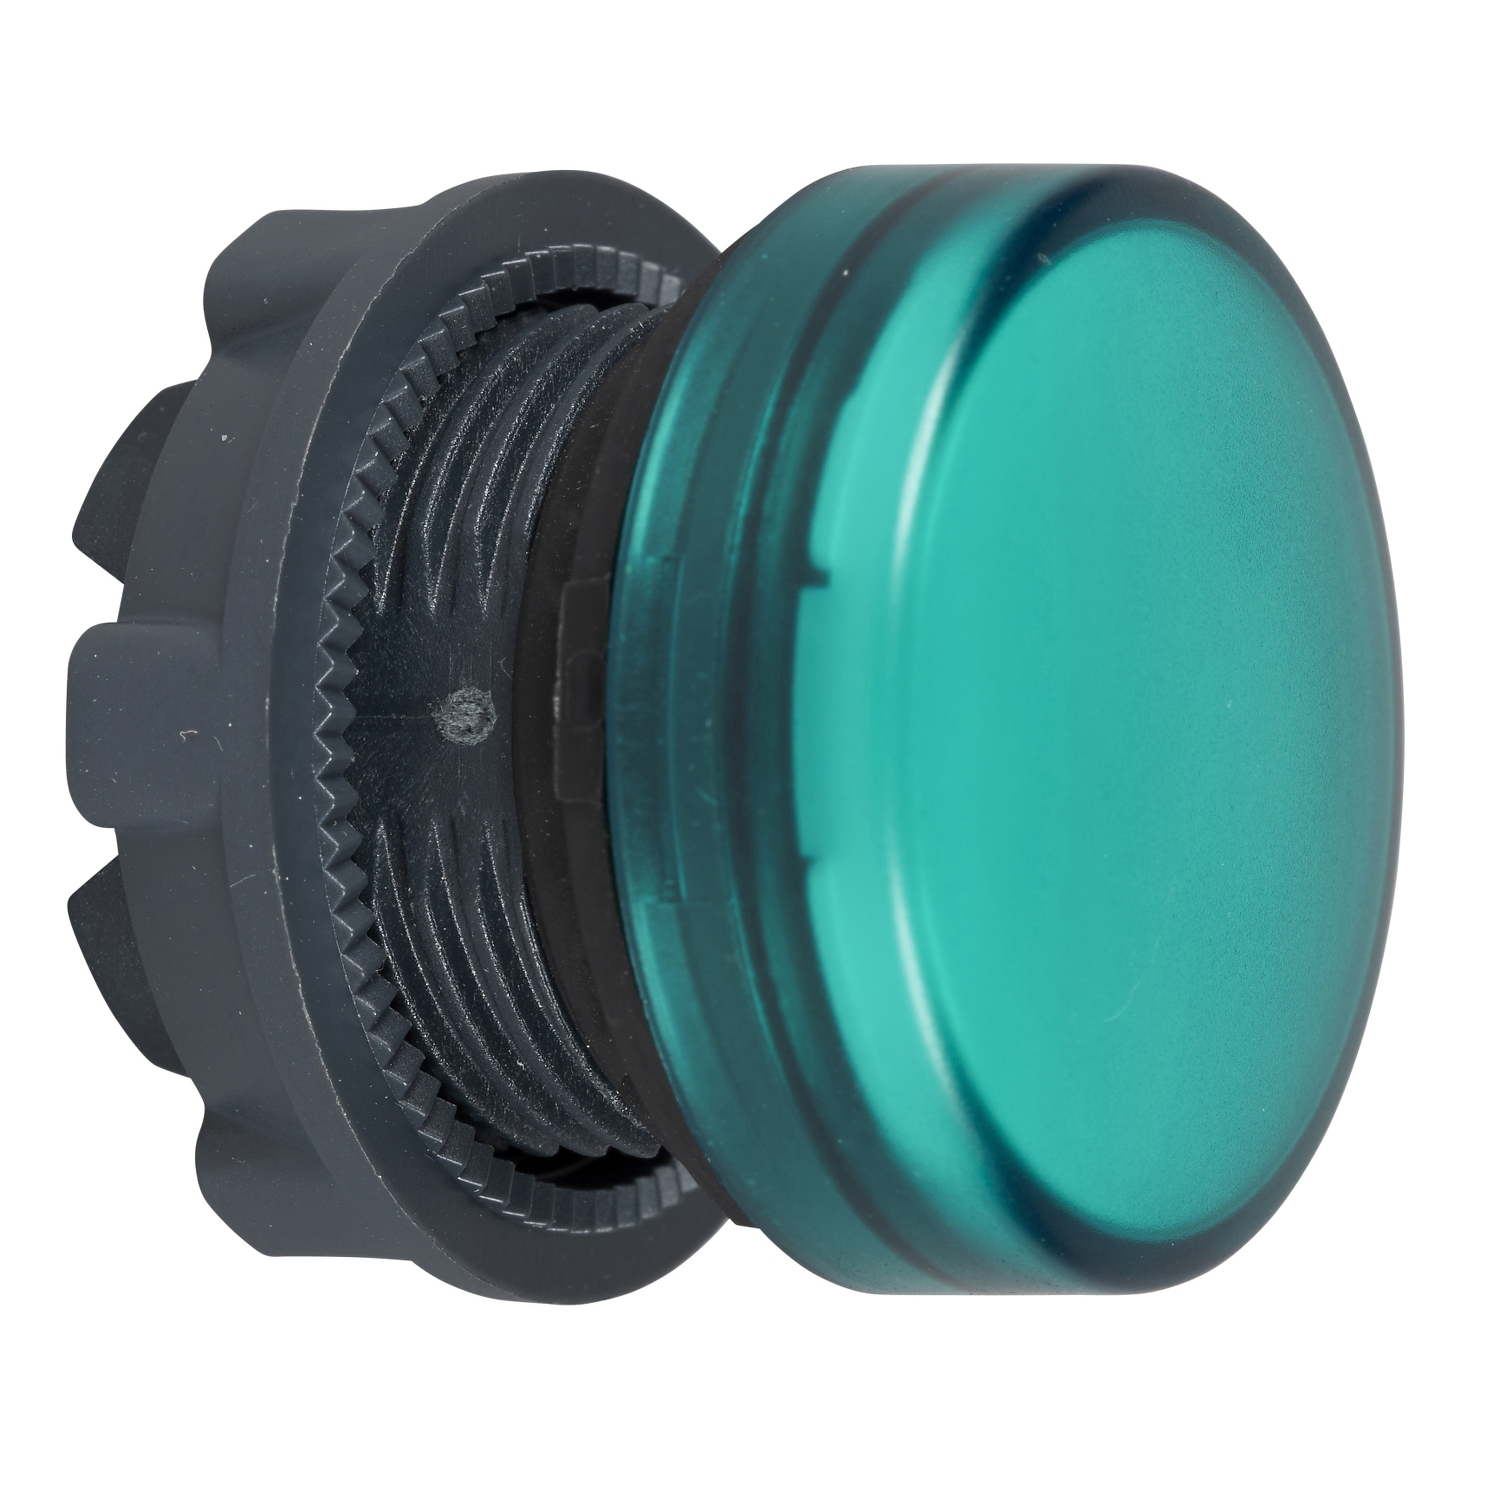 Head for pilot light, Harmony XB5, plastic, green, 22mm, universal LED, plain lens